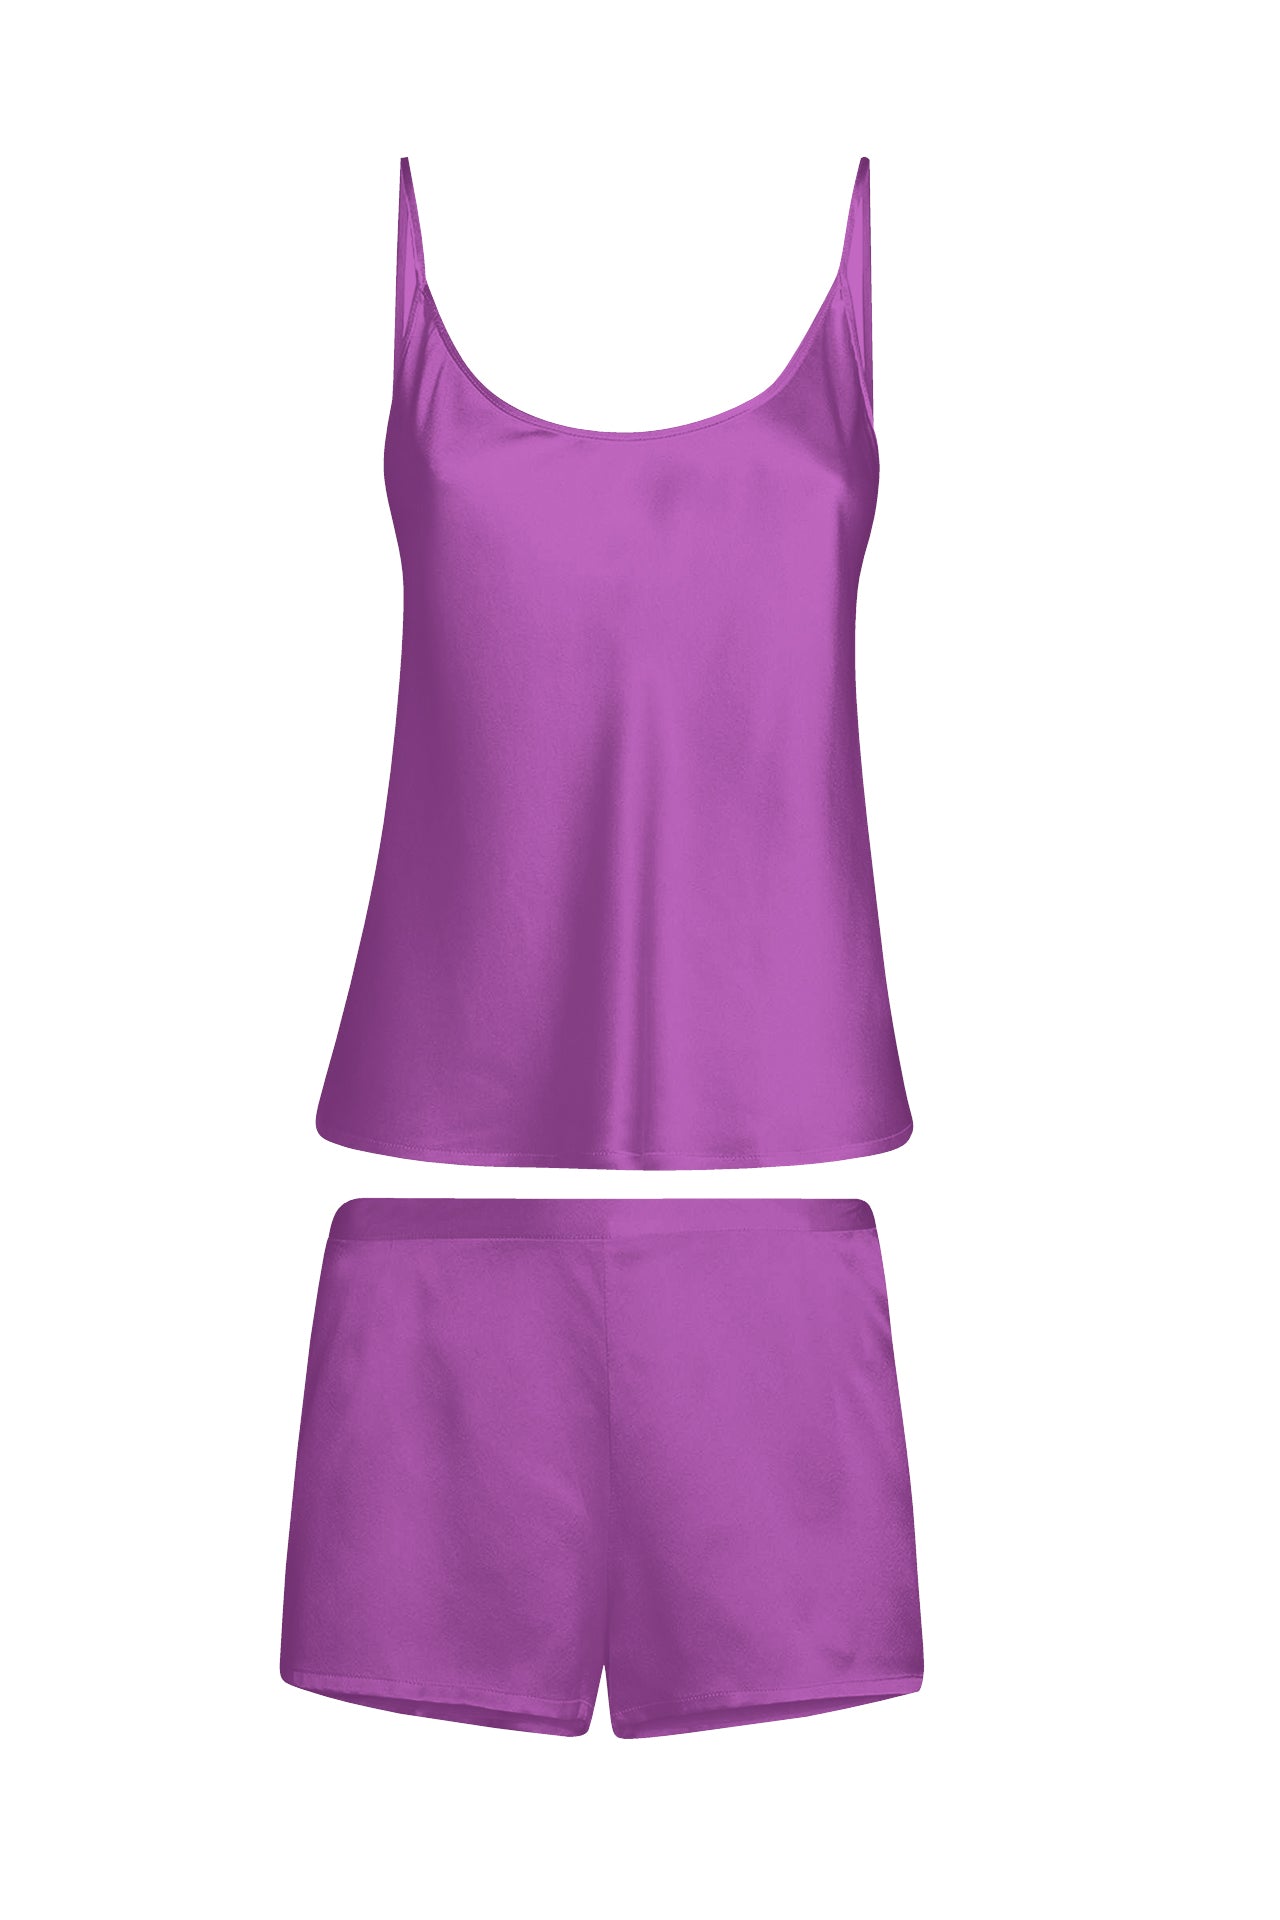 "Kyle X Shahida" "lavender silk camisole" "silk camisole" "lilac camisole top"